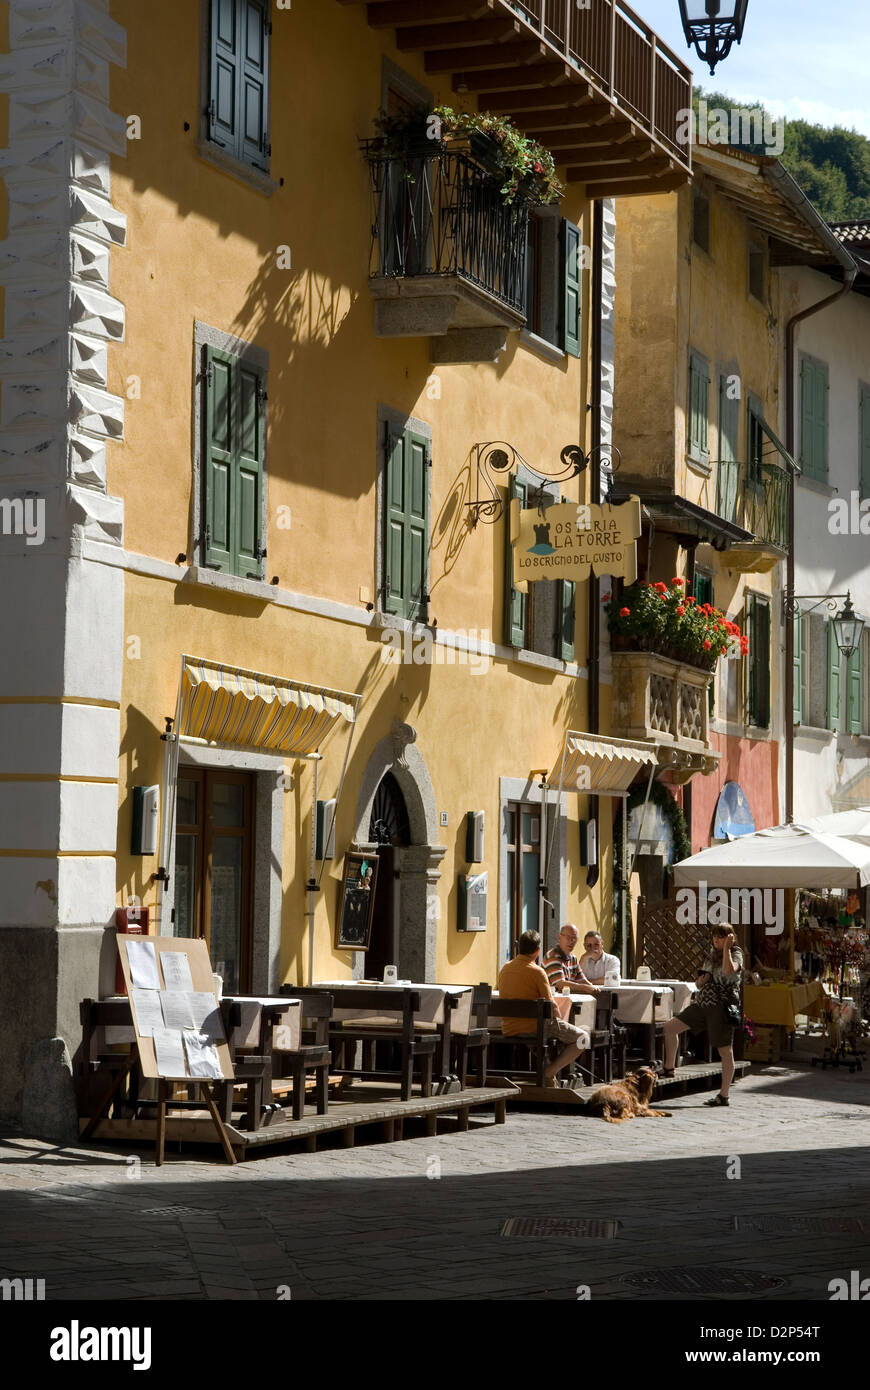 Pieve di Ledro Pieve Italien Reise Tourismus Stockfoto